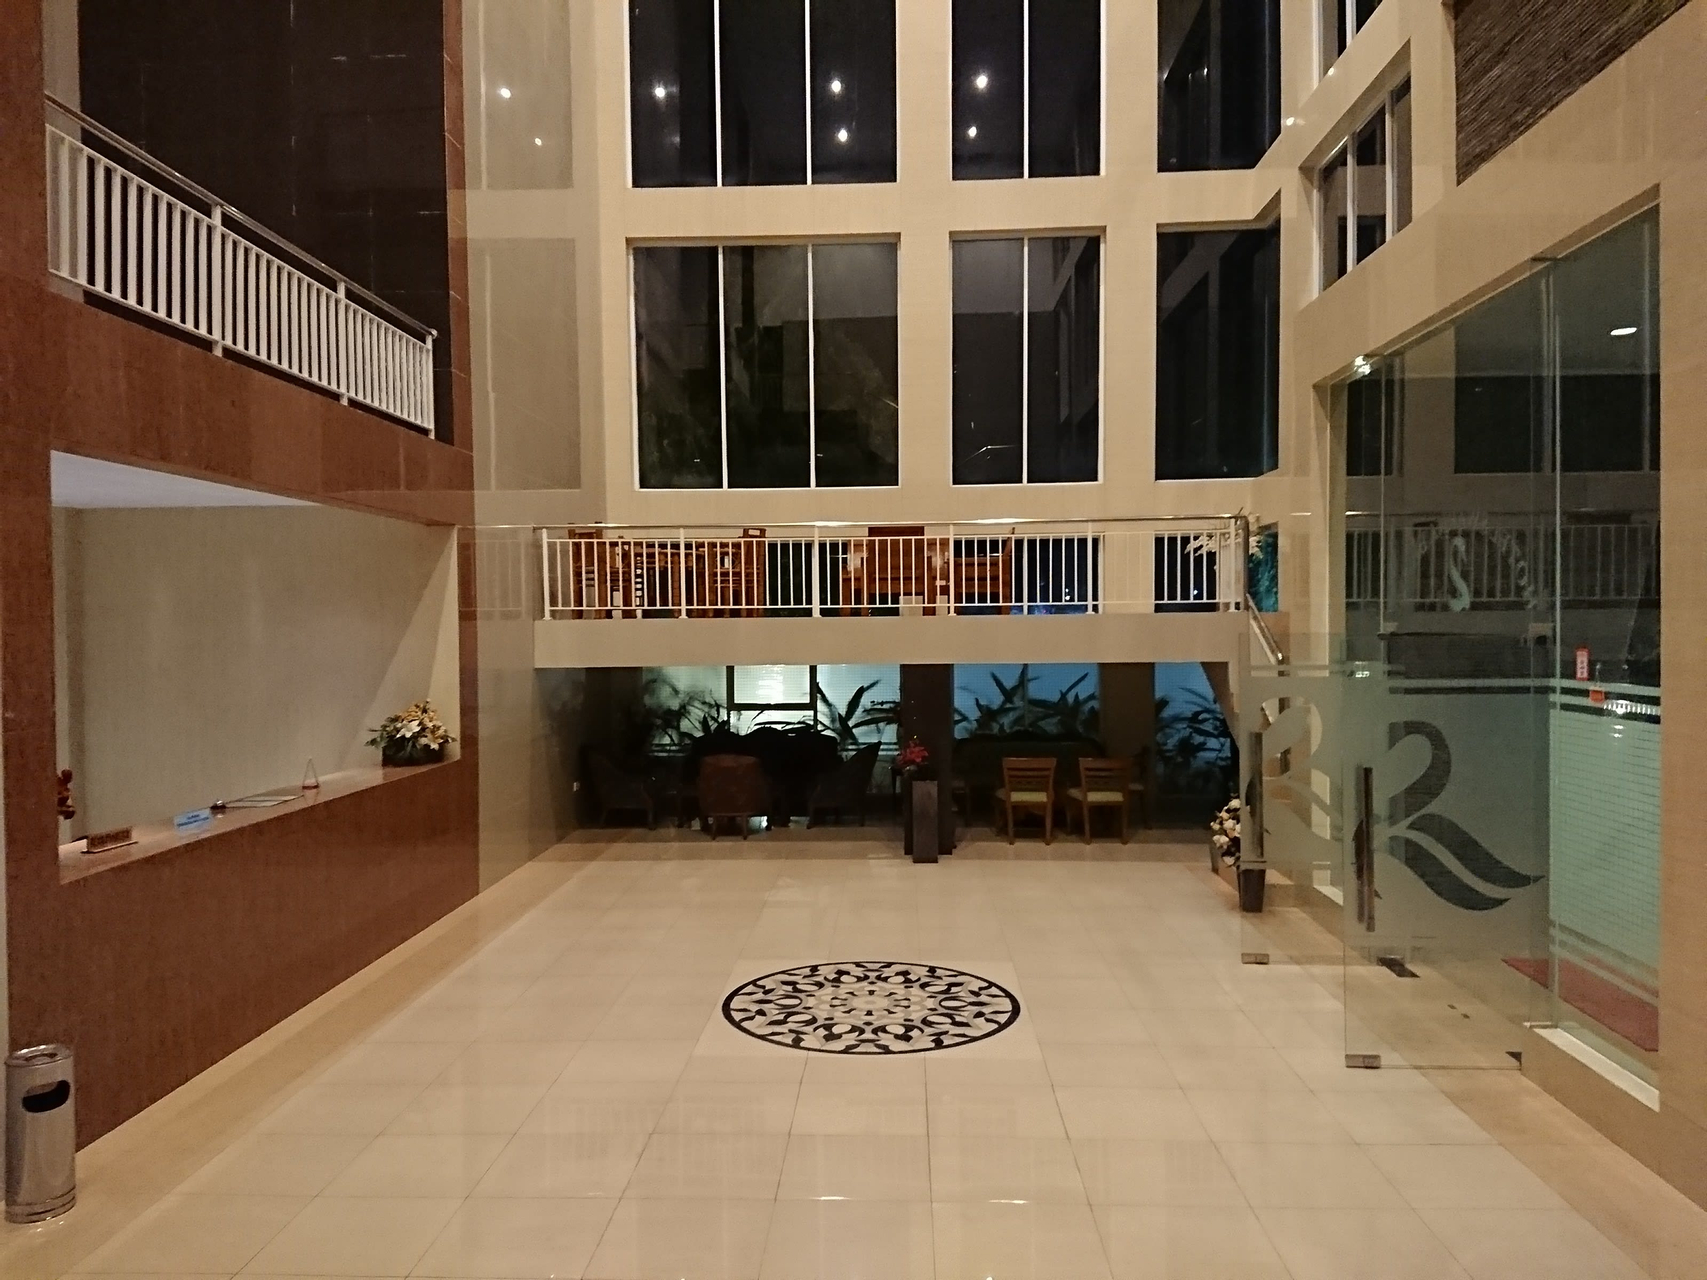 Public Area, Hotel Swarnabhumi 2 (HSB 2), Bungo